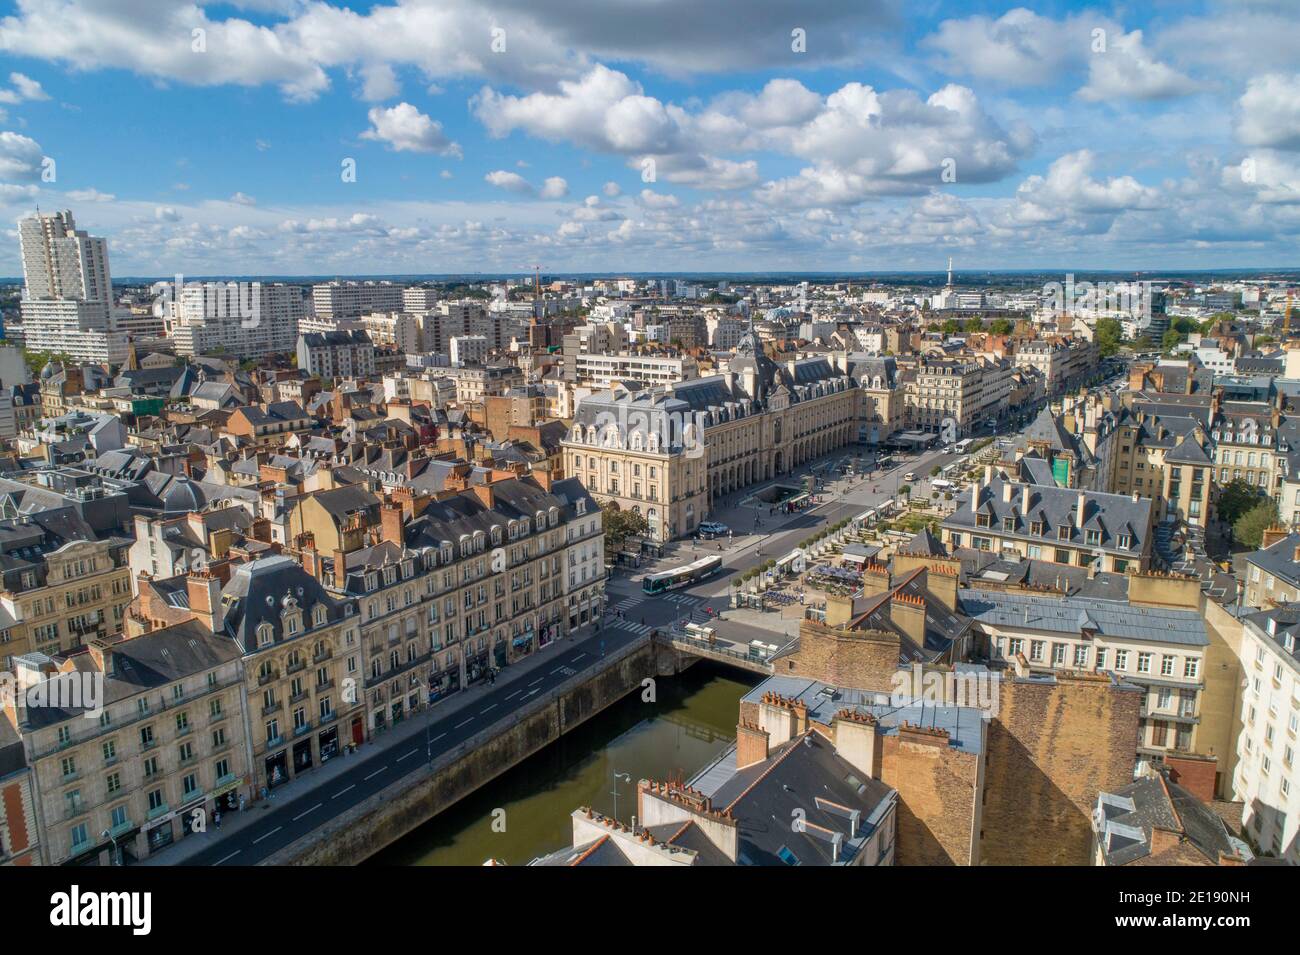 Rennes (Brittany, north-western France): aerial view of the city centre, the Vilaine River, quay “Quai Emile Zola” and “place de la Republique” square Stock Photo